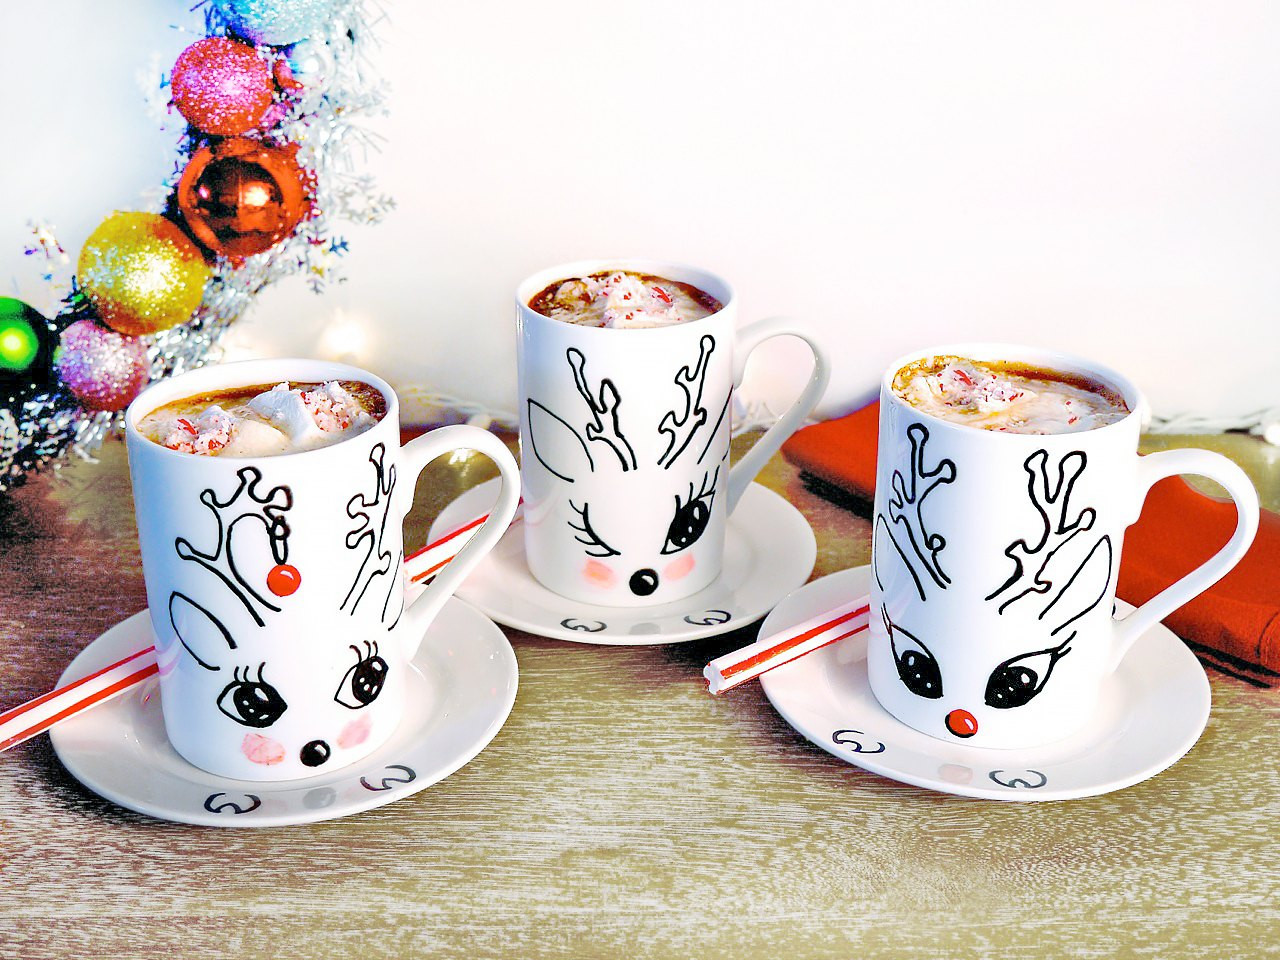 DIY Christmas Mugs
 DIY Holiday Reindeer Mugs